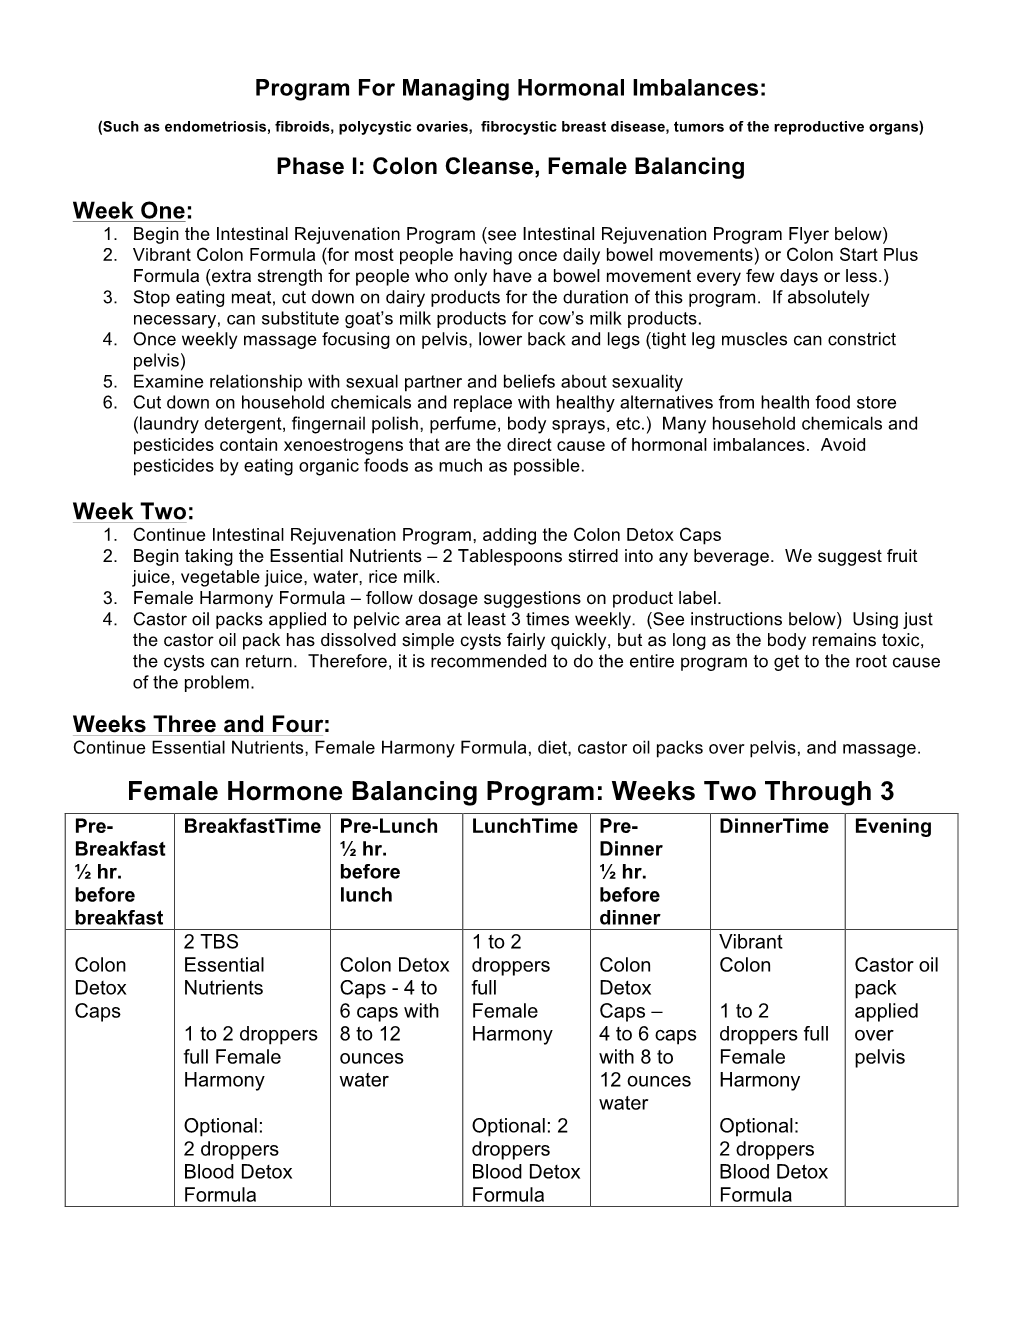 Female Hormone Balancing Program: Weeks Two Through 3